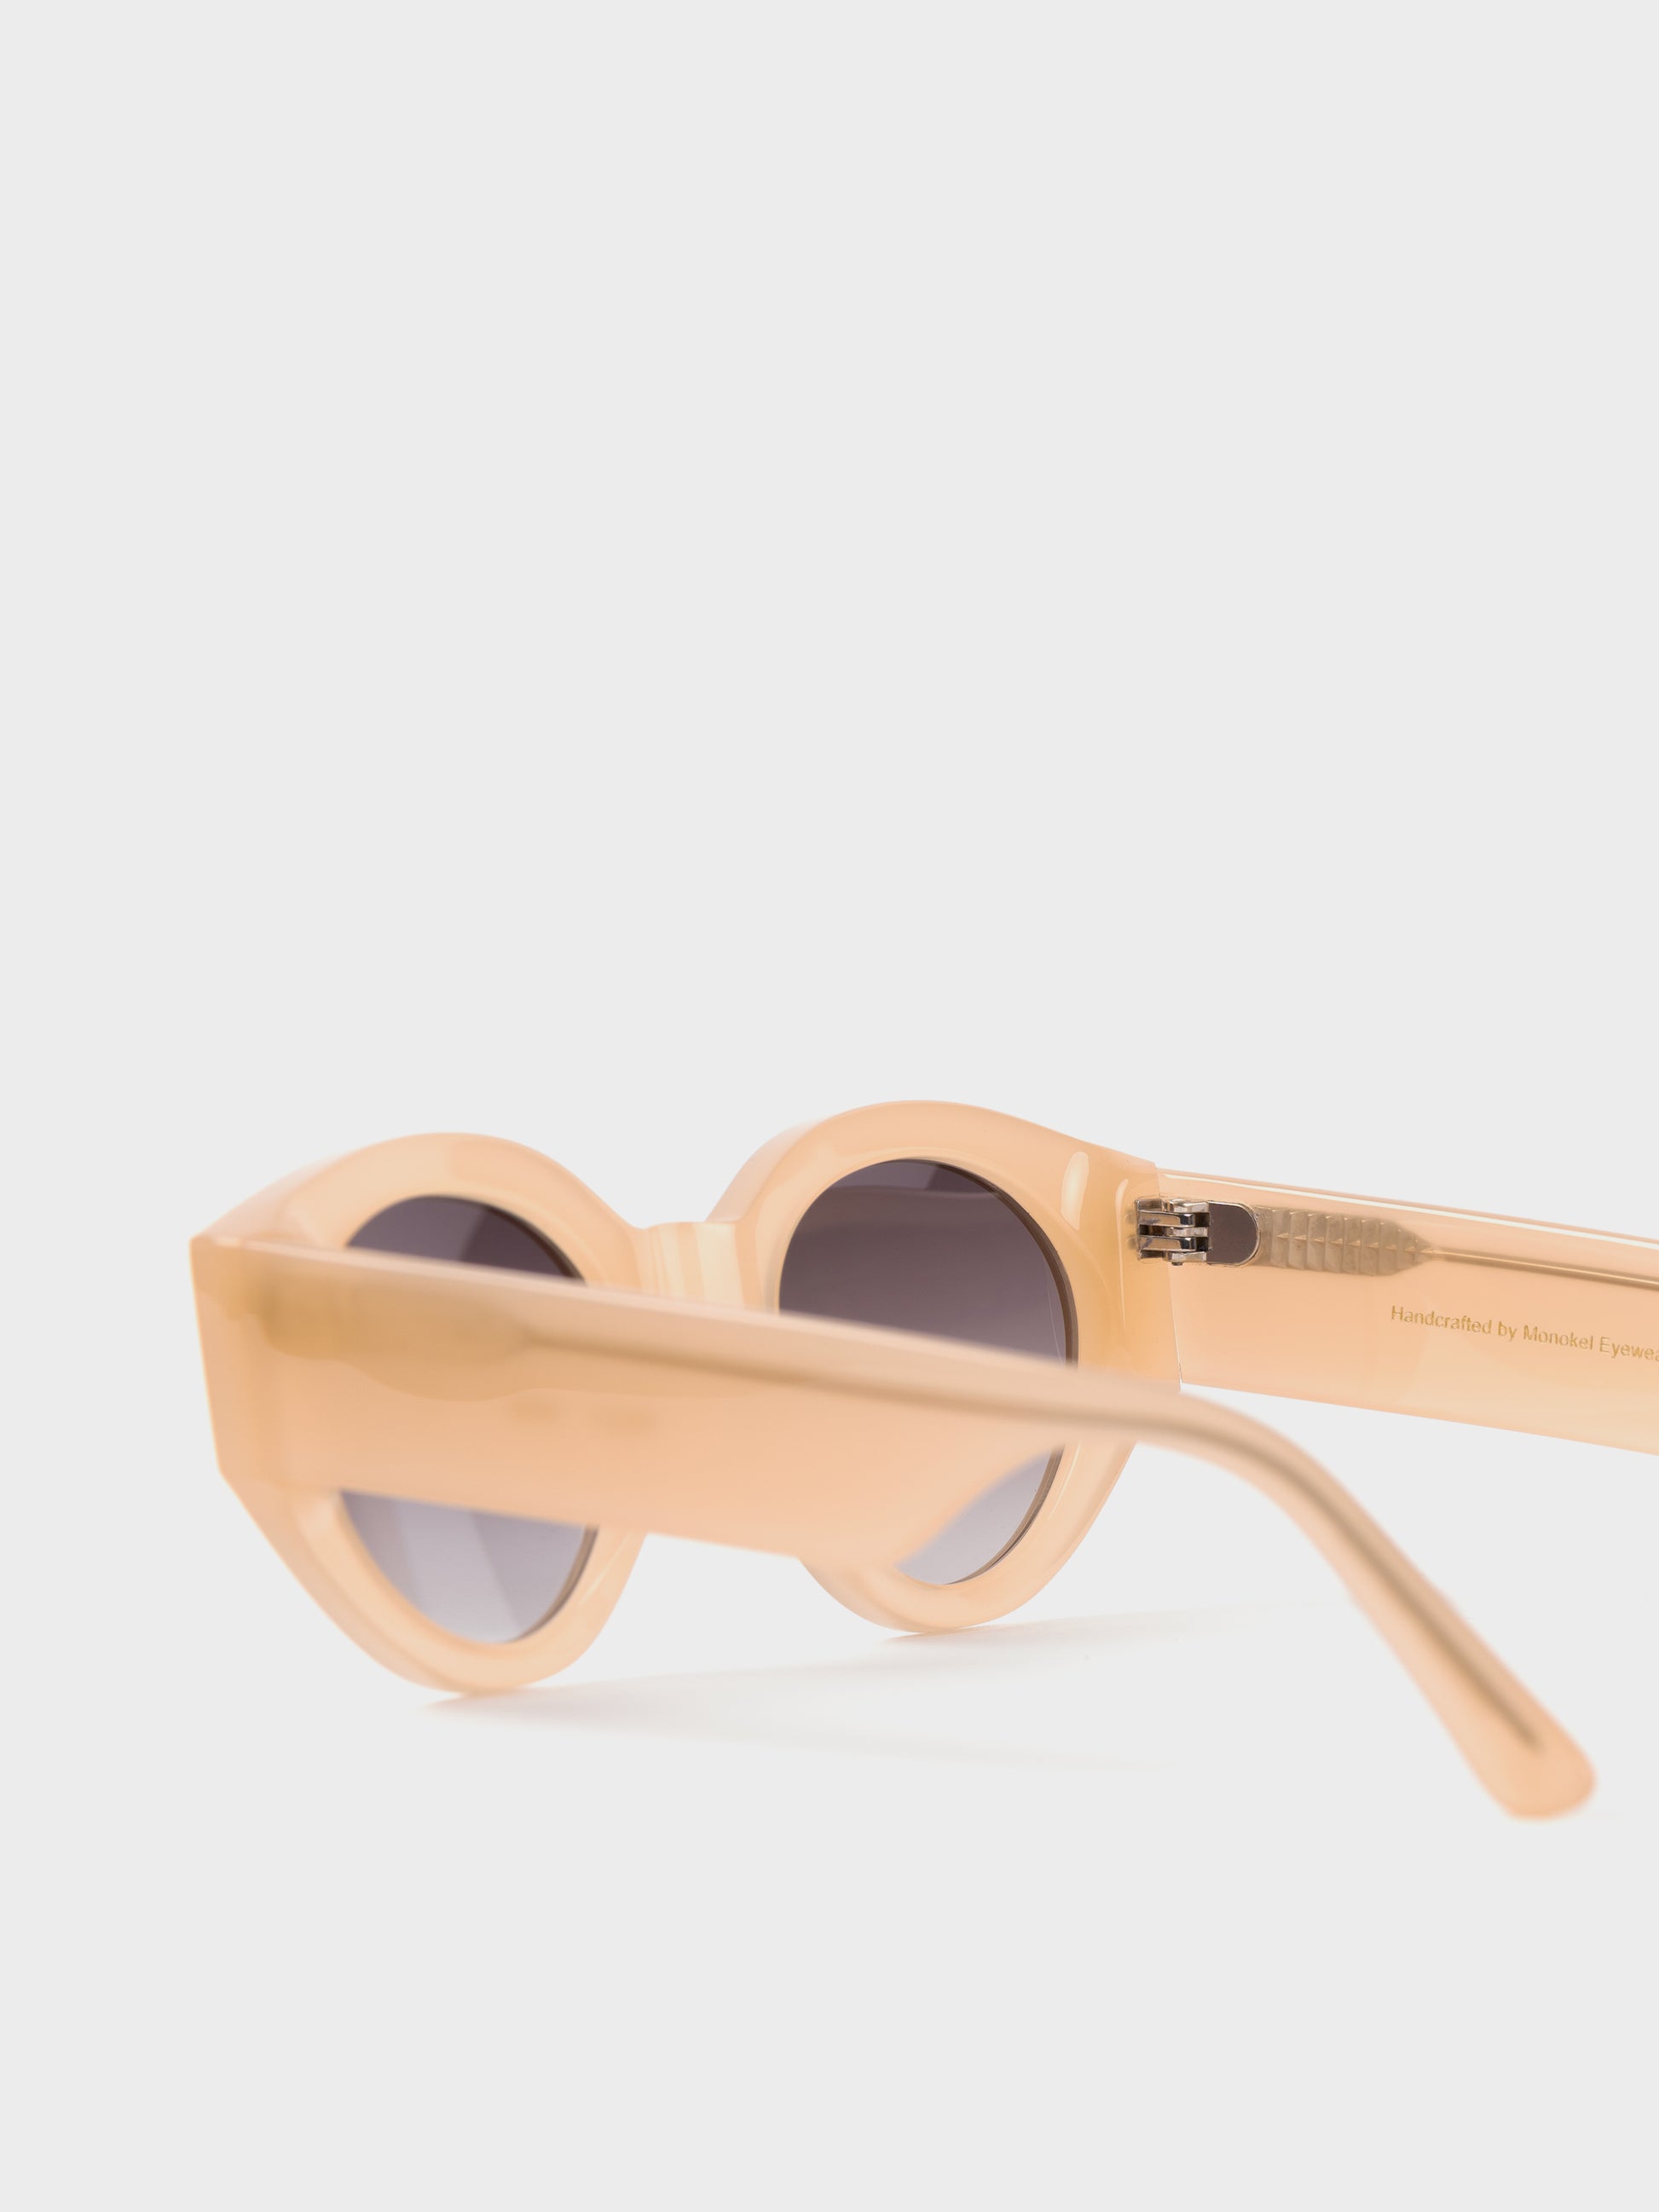 Monokel Sunglasses - Polly Sand